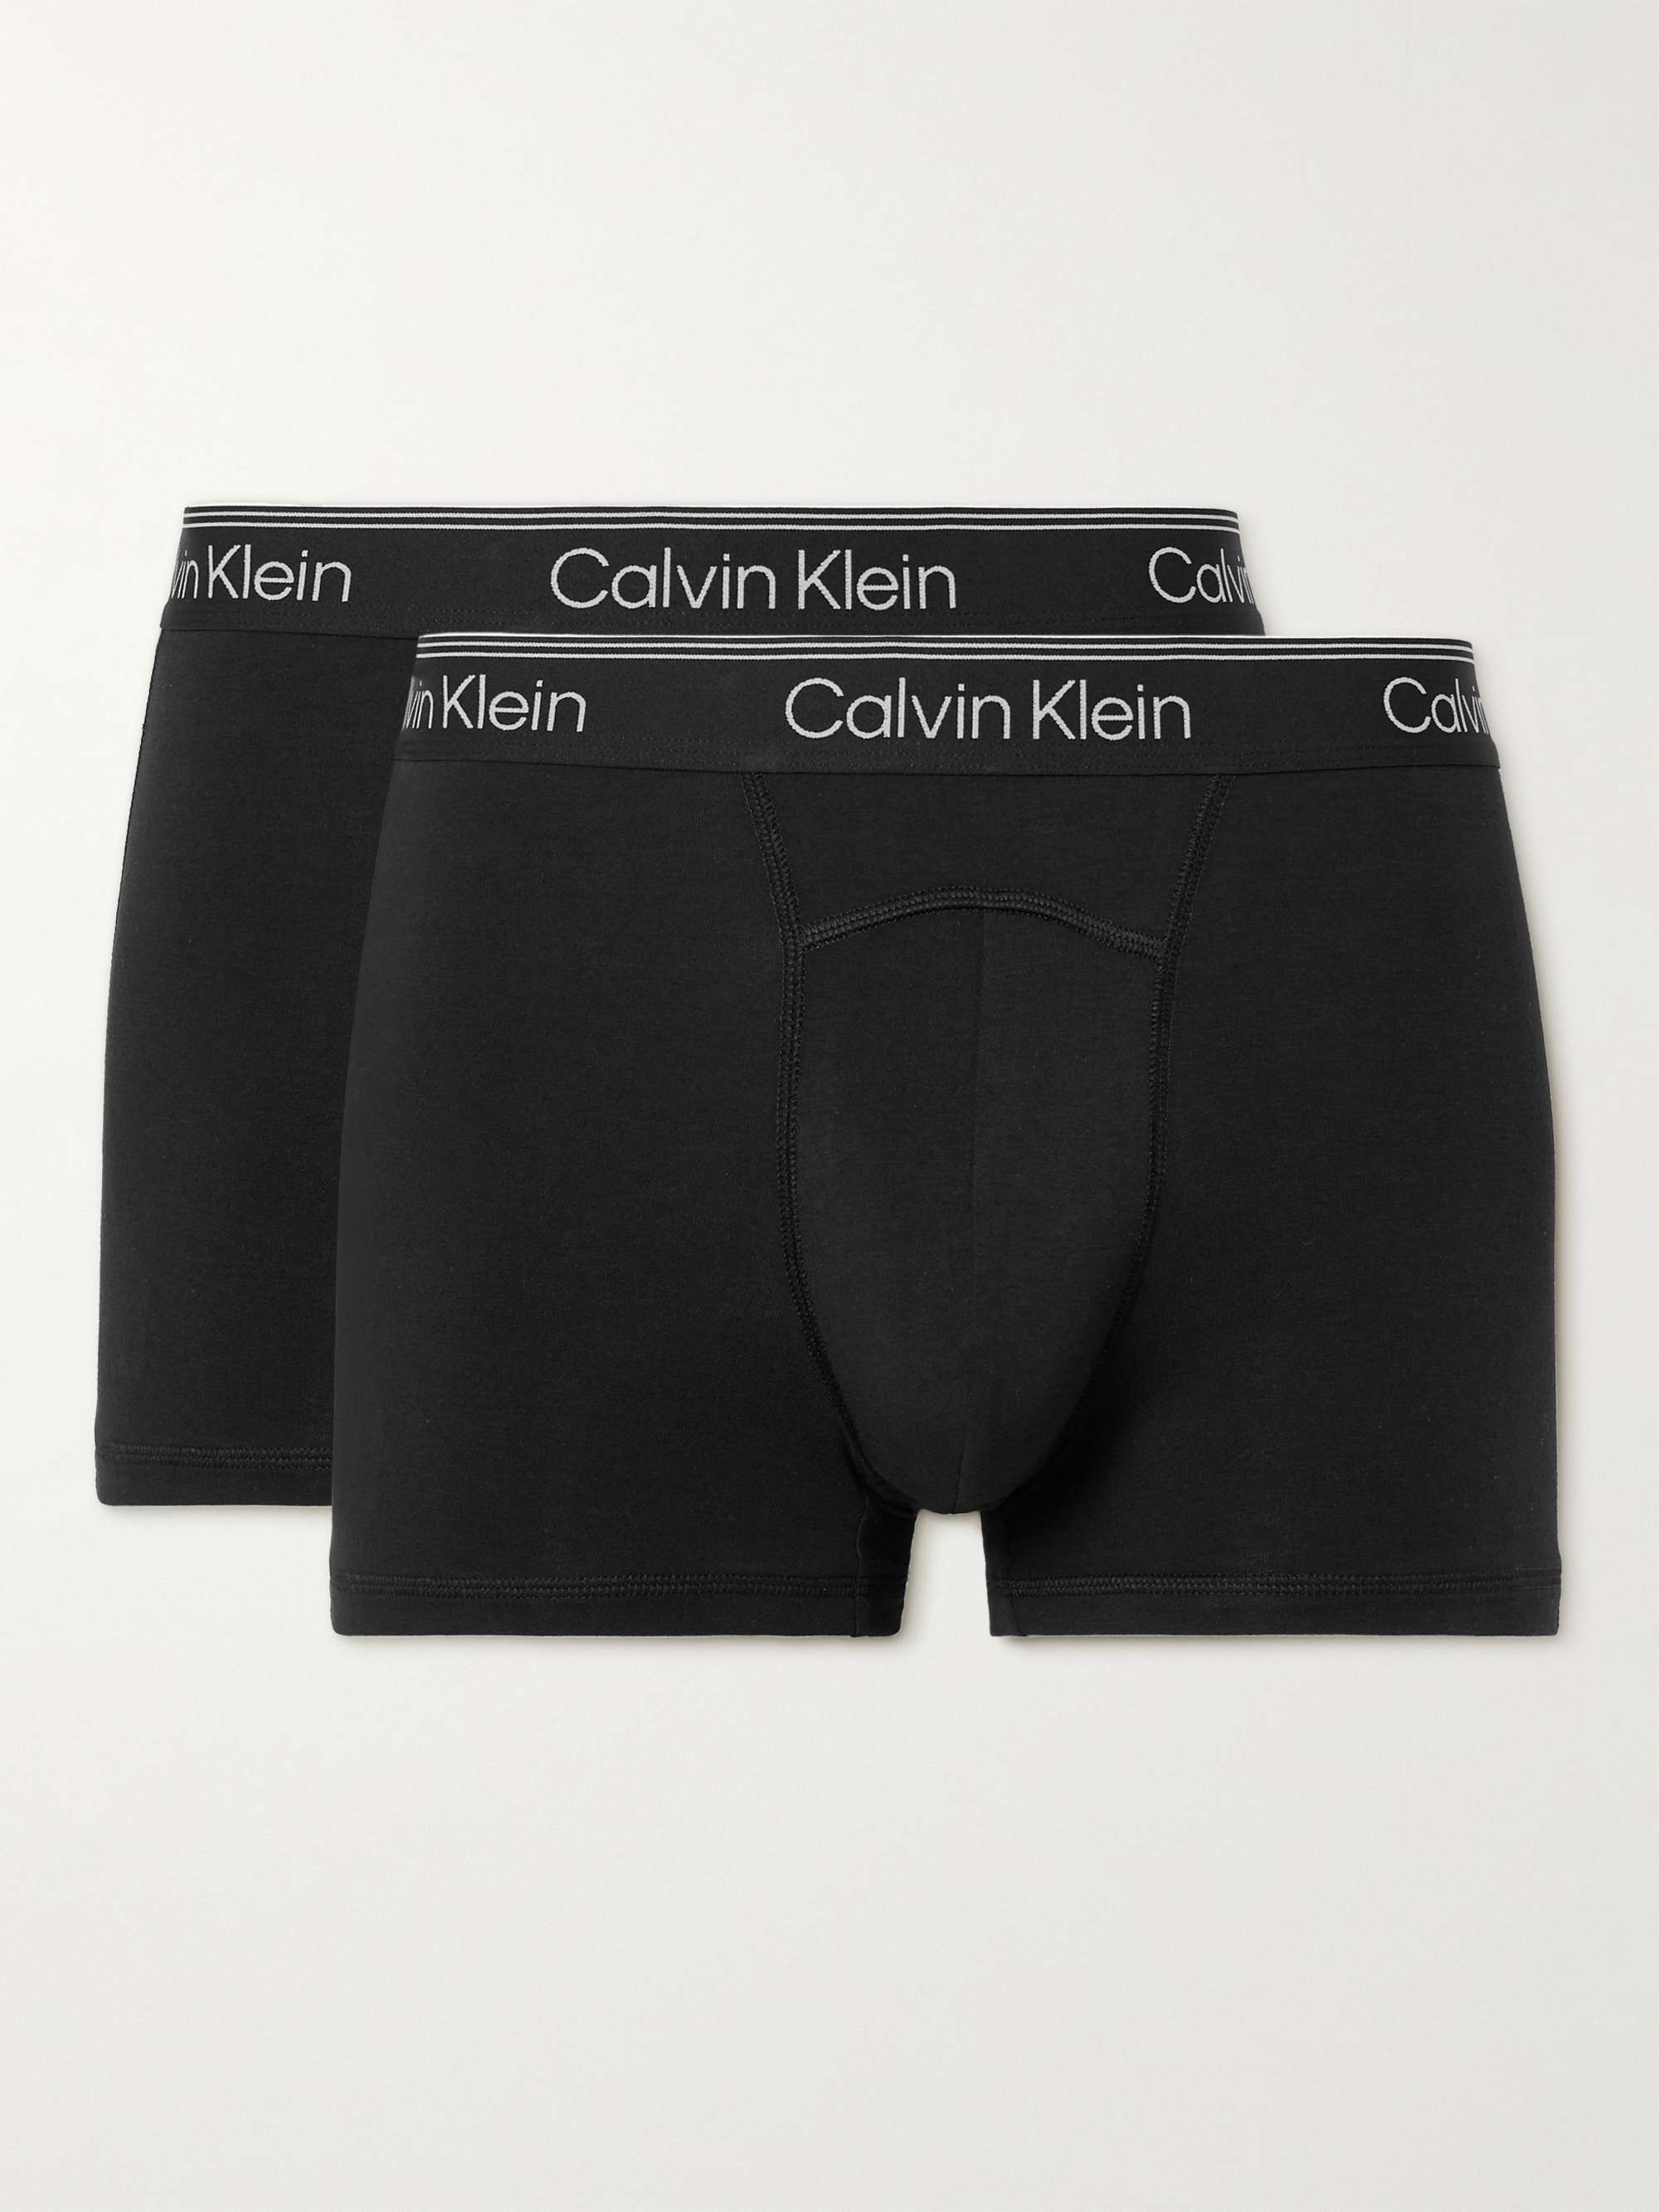 Men Denim Jean Print Boxer Briefs Underwear Cotton Shorts Pants Swim Trunks